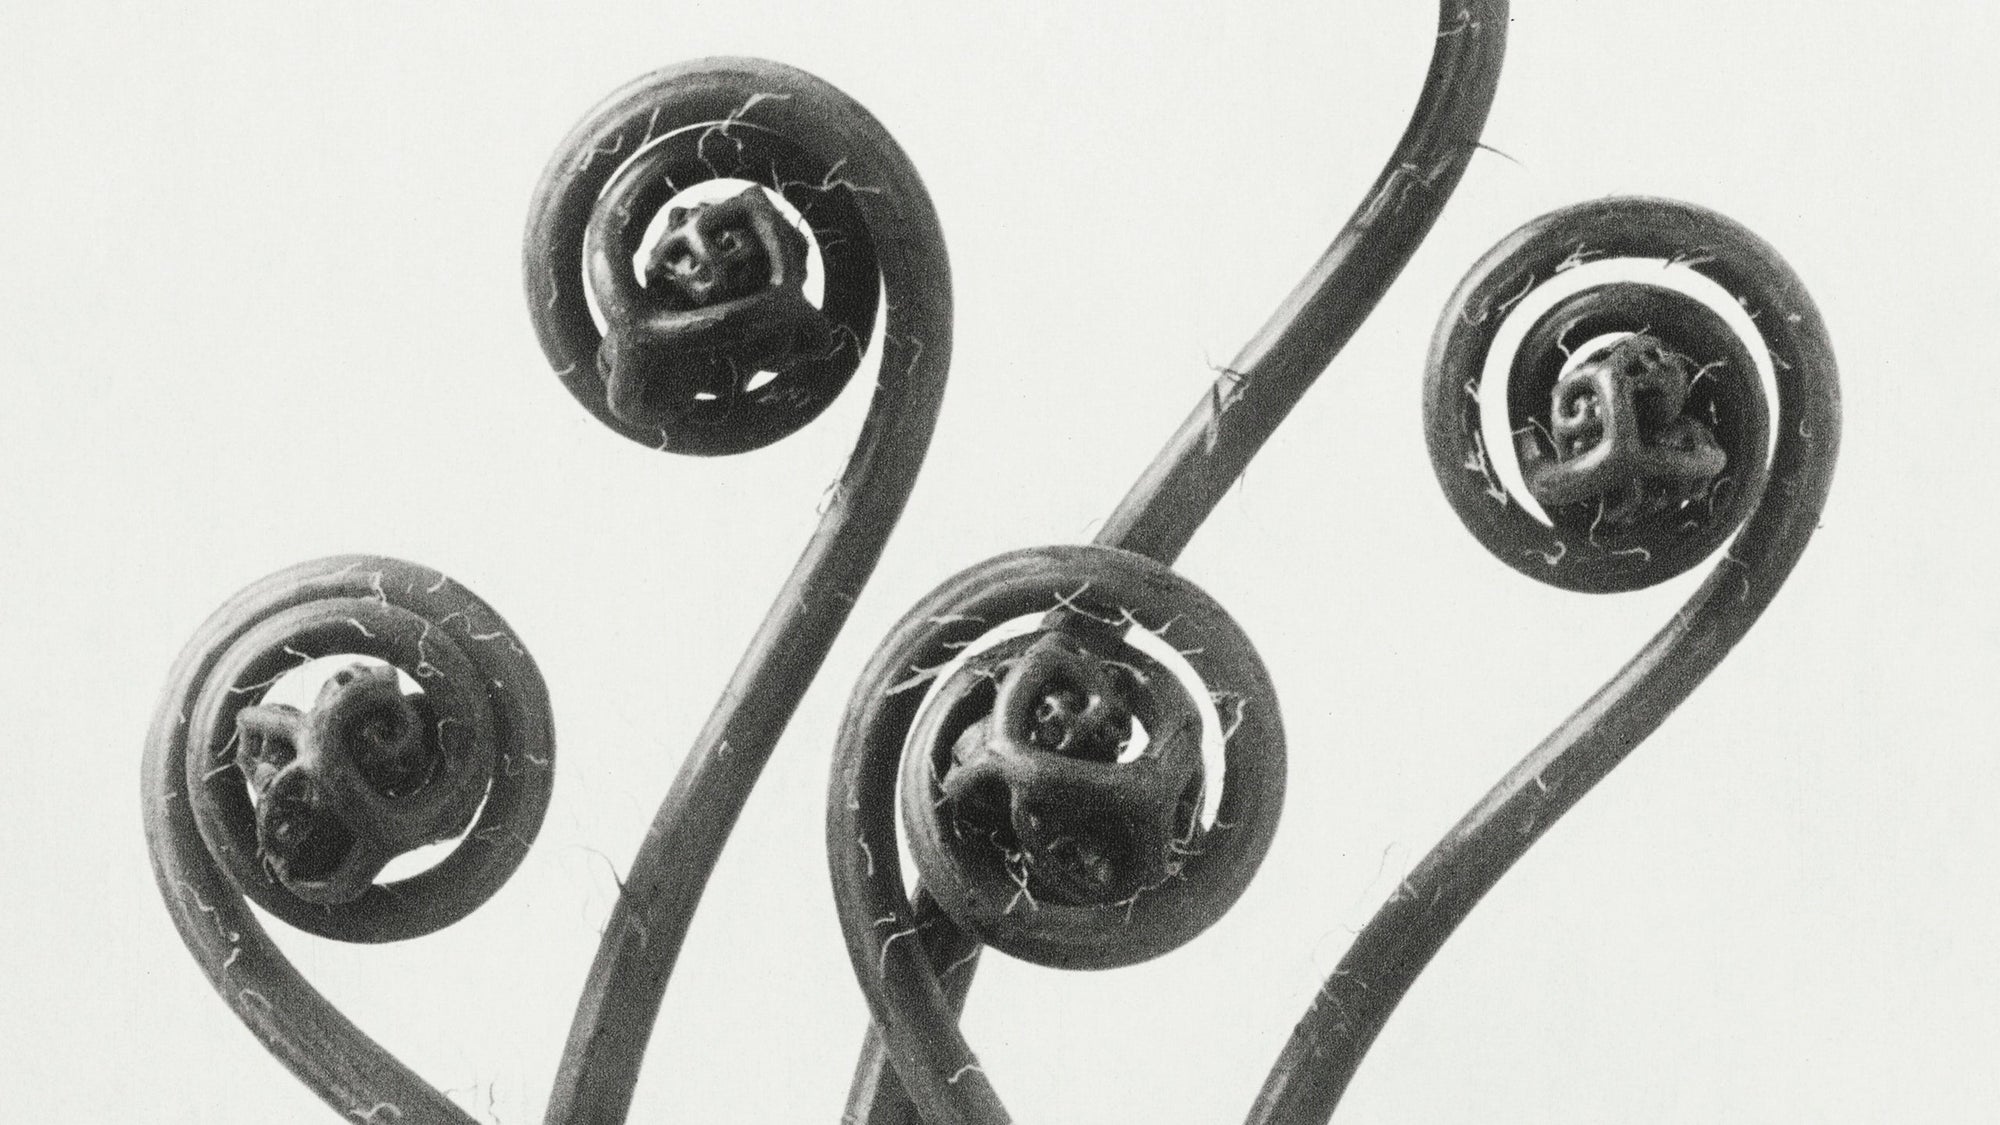 Karl blossfeldt ferns photograph via Rawpixel